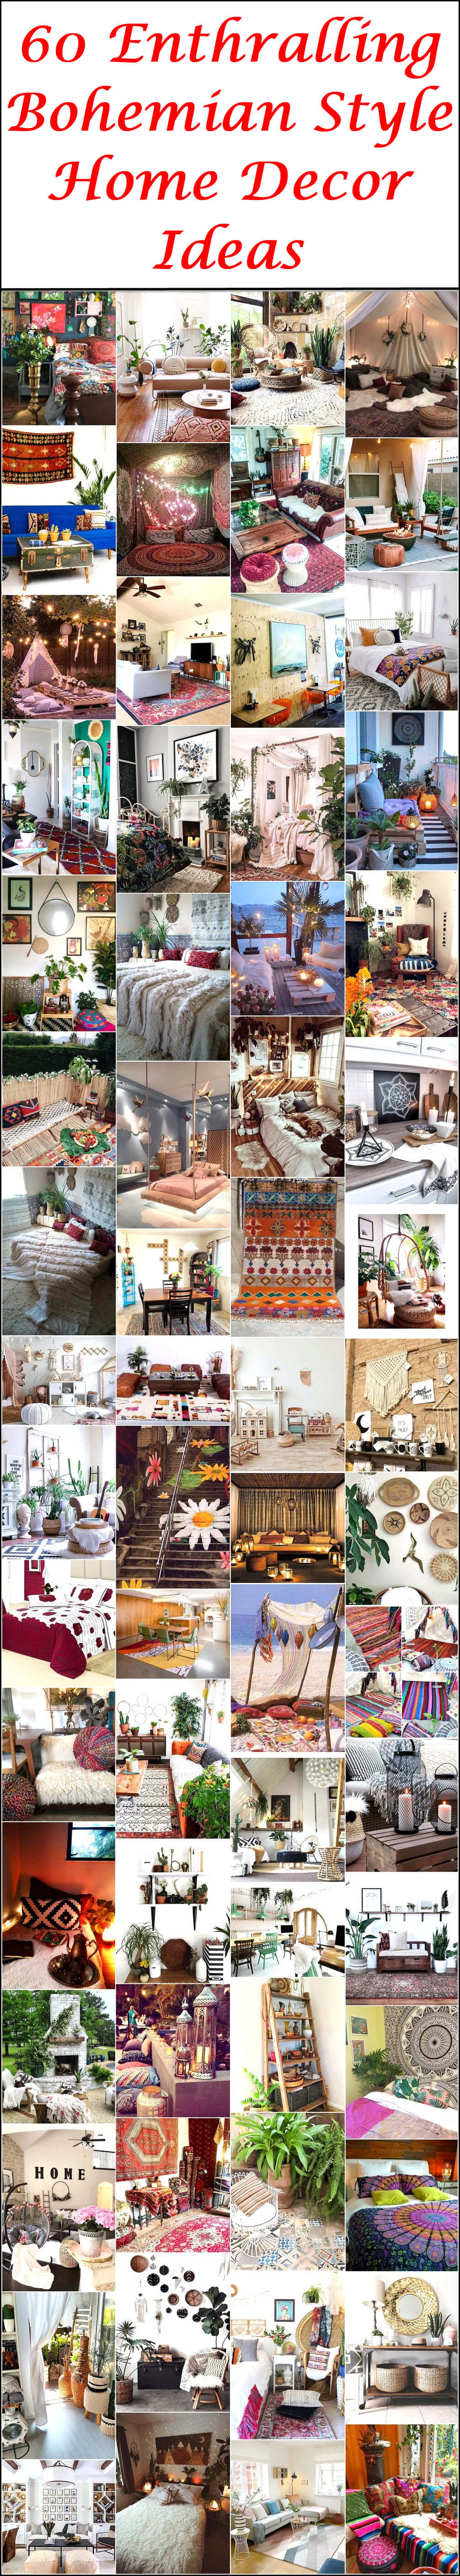 60 Enthralling Bohemian Style Home Decor Ideas